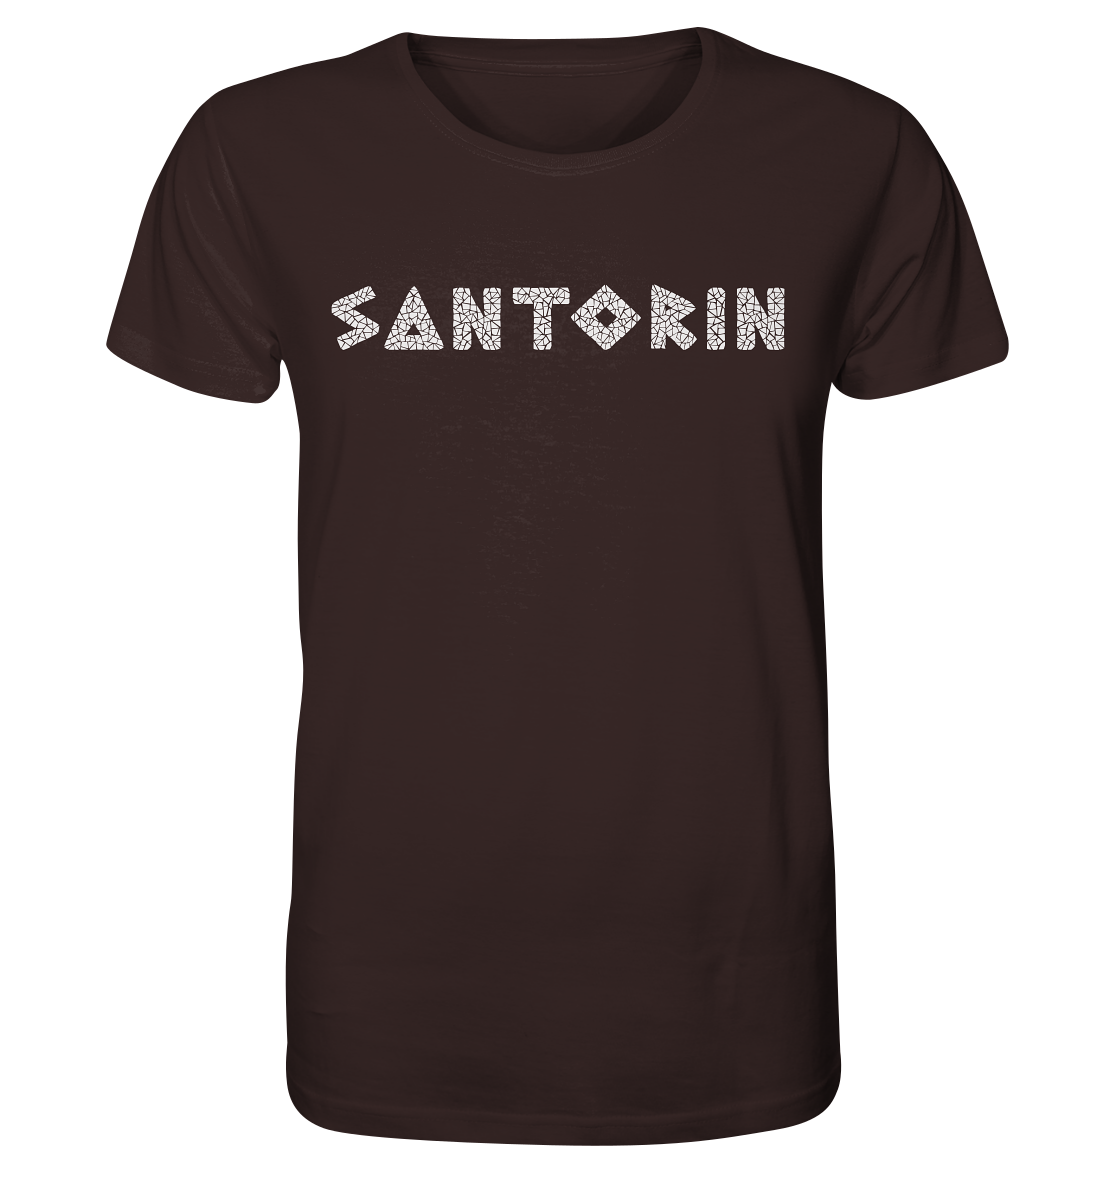 Santorin Mosaik - Organic Shirt